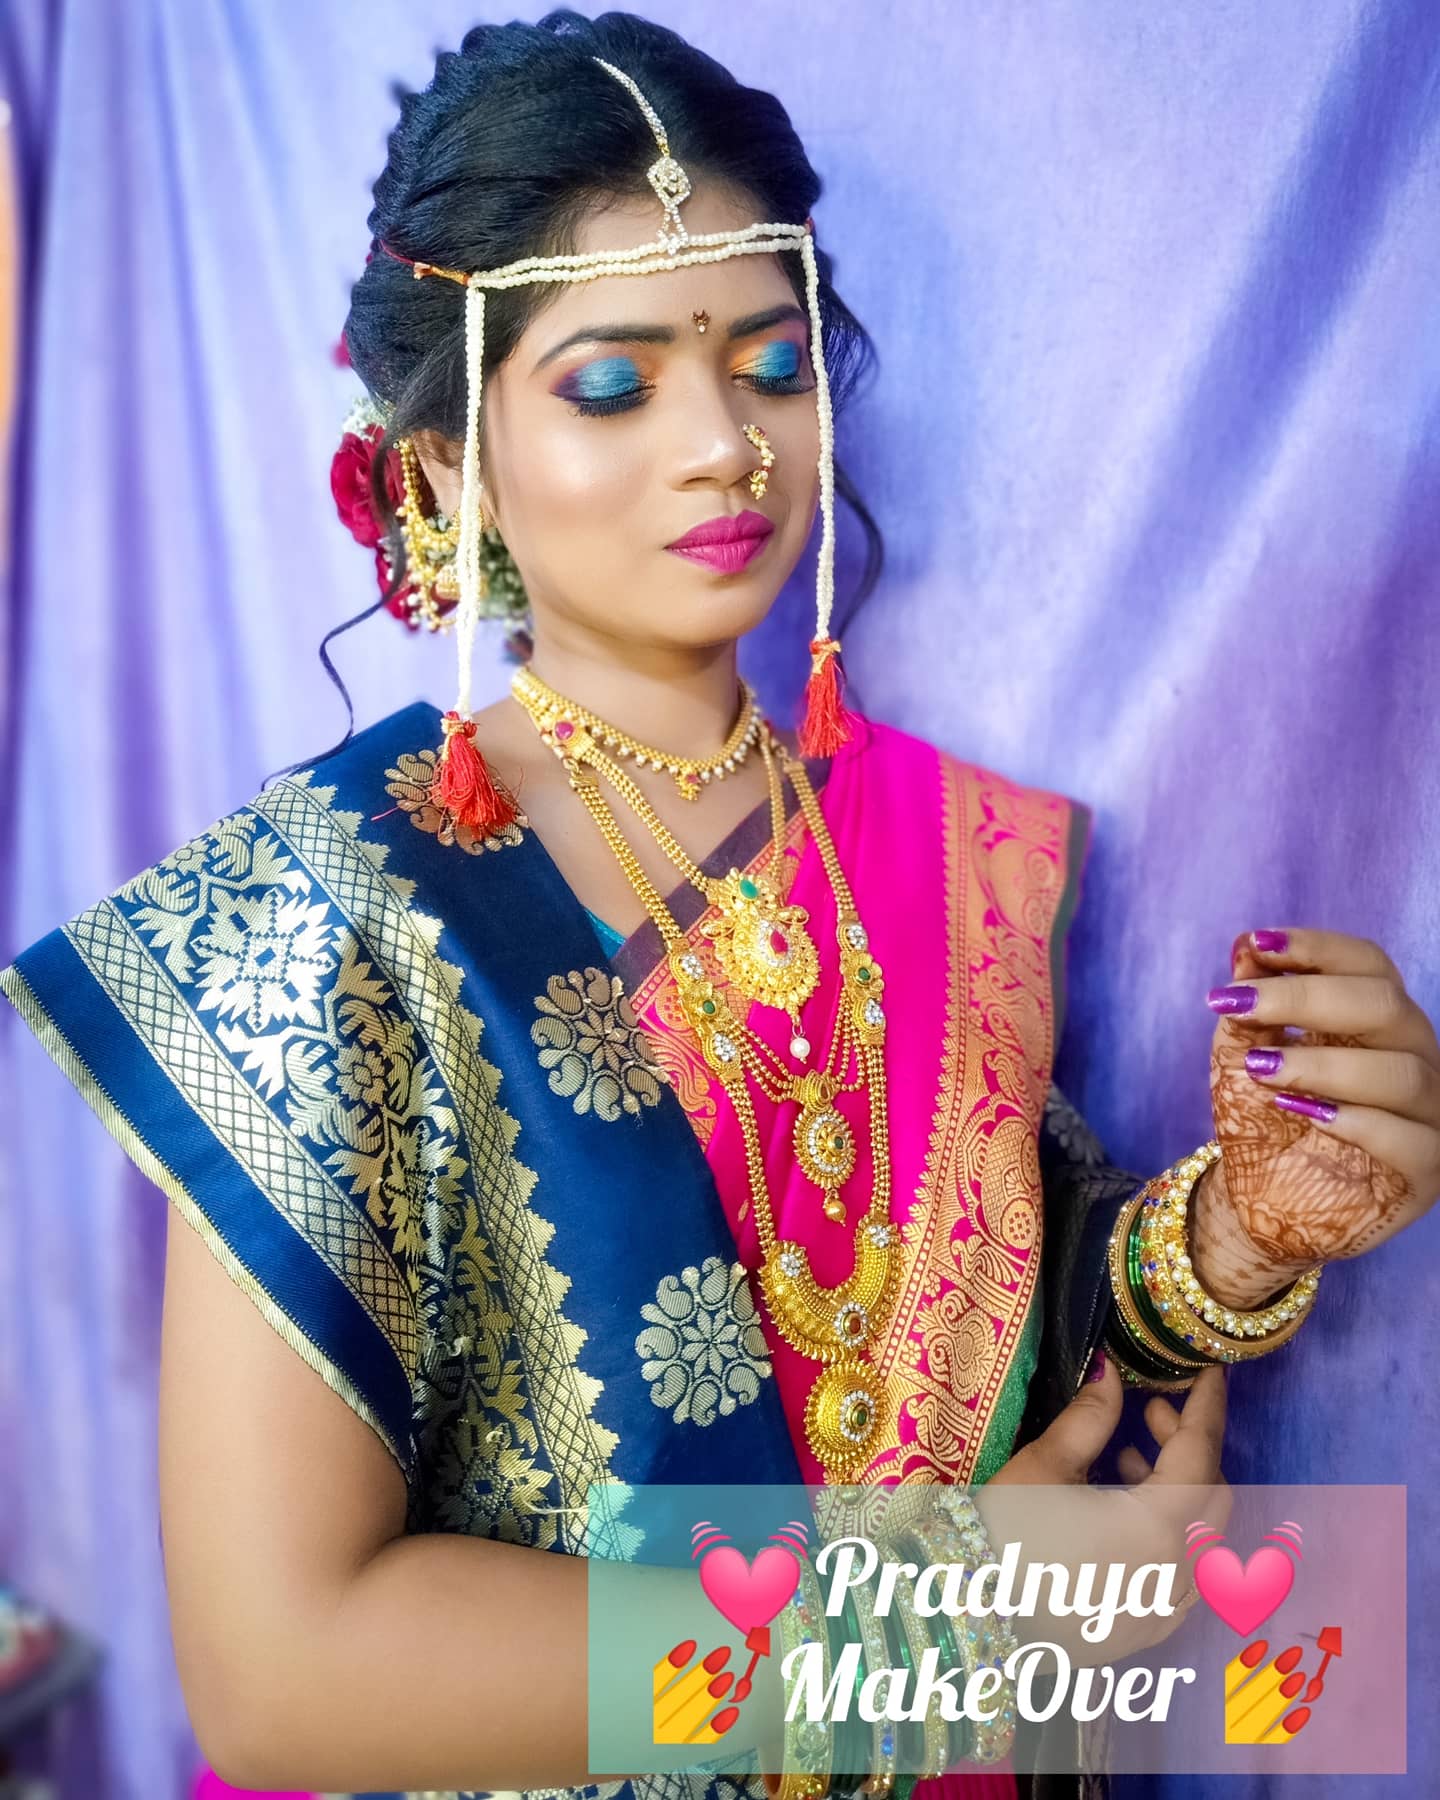 pradnya-chafe-makeup-artist-mumbai